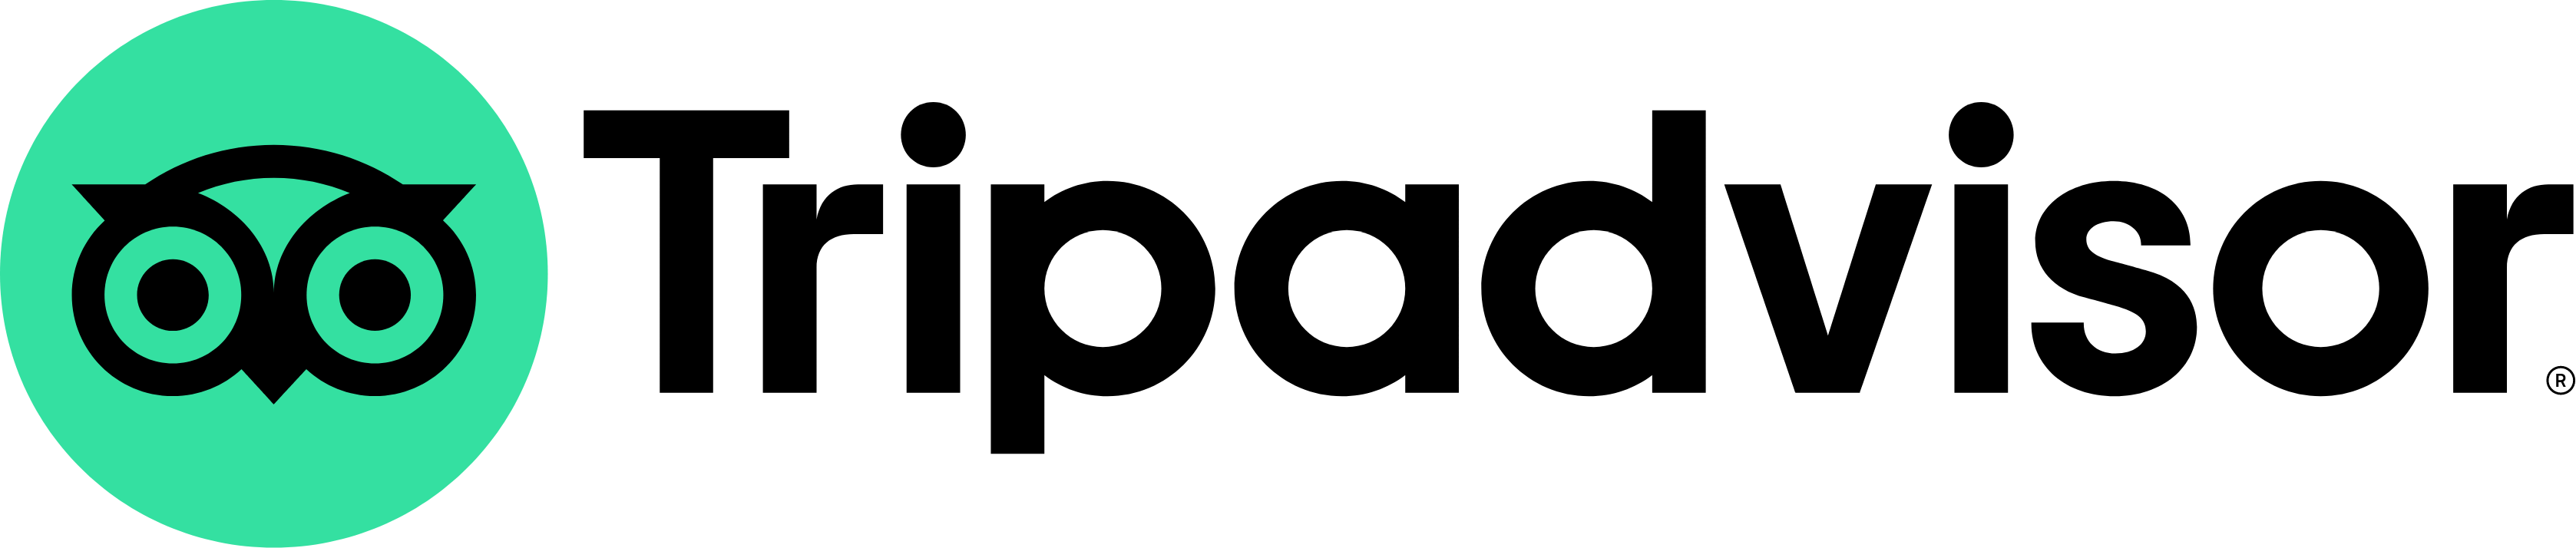 TripAdvisor logo large (transparent PNG)